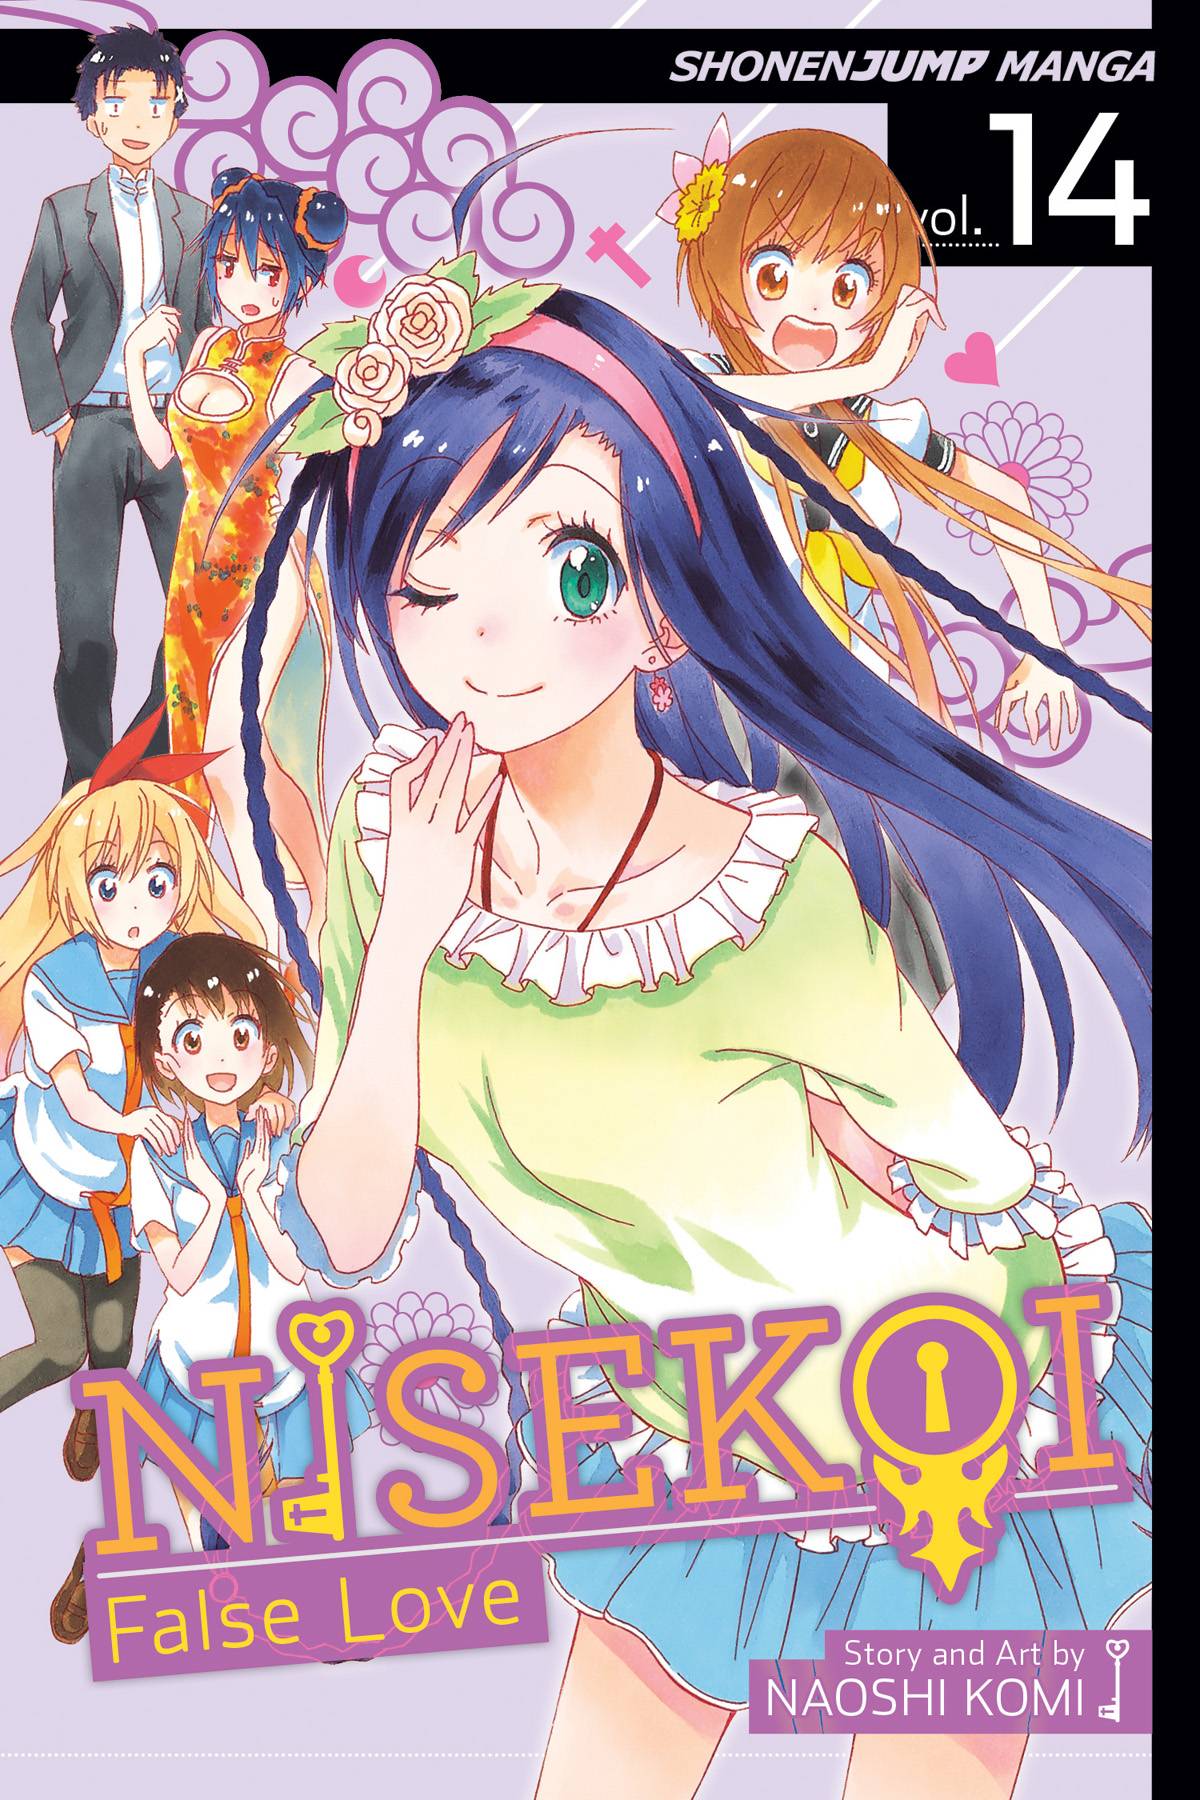 Nisekoi - False Love (TV) - Anime News Network